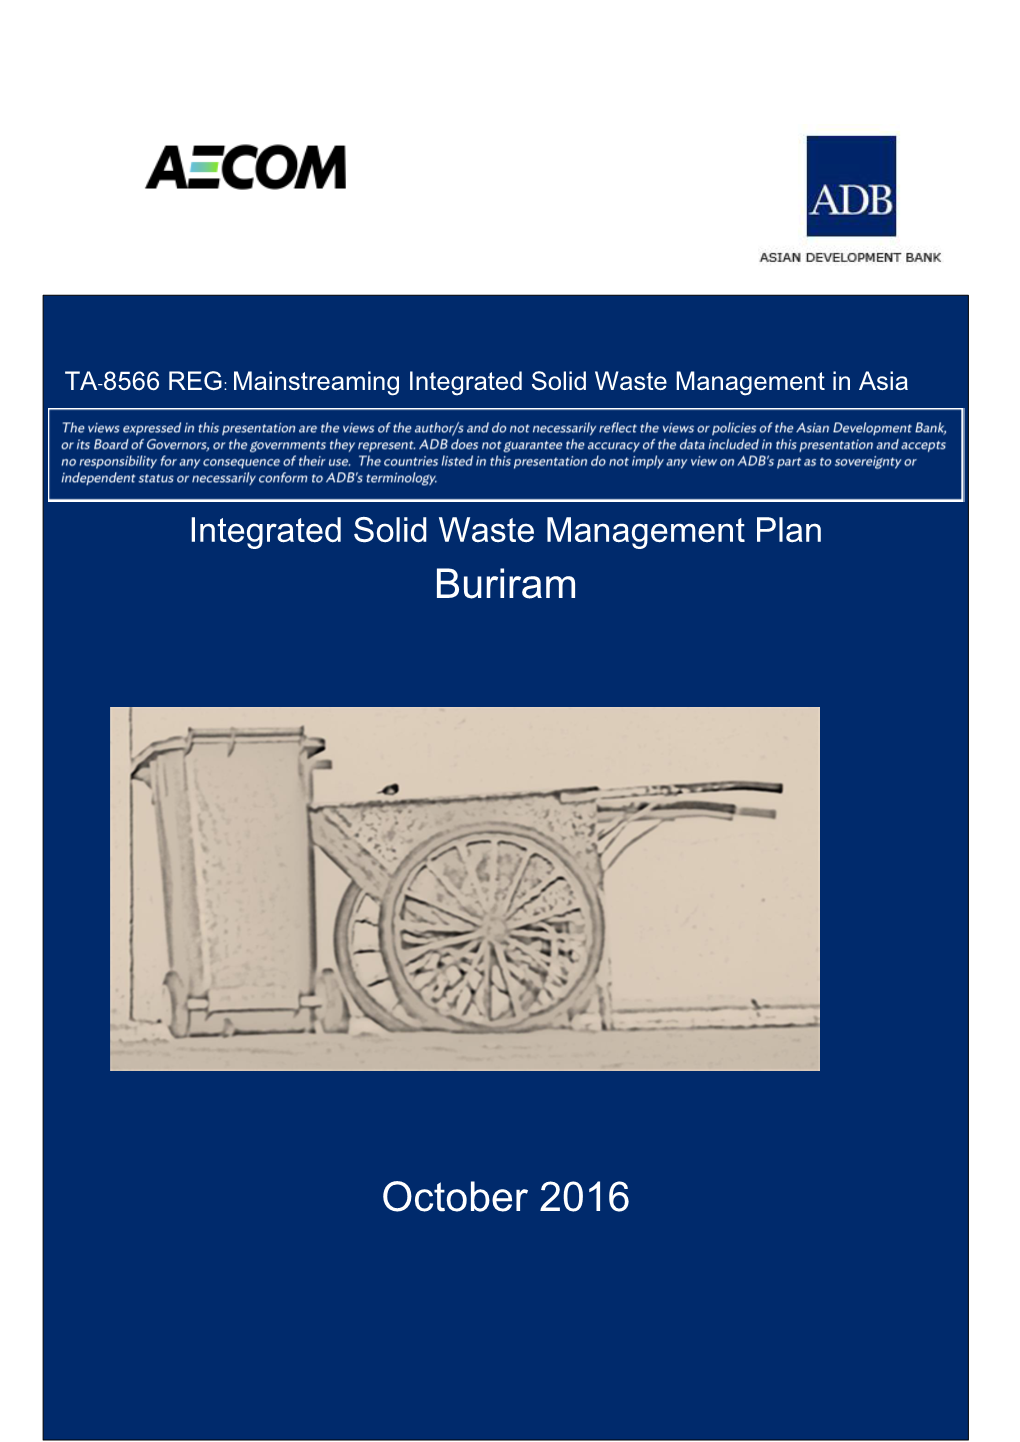 Integrated Solid Waste Management Plan: Buriram